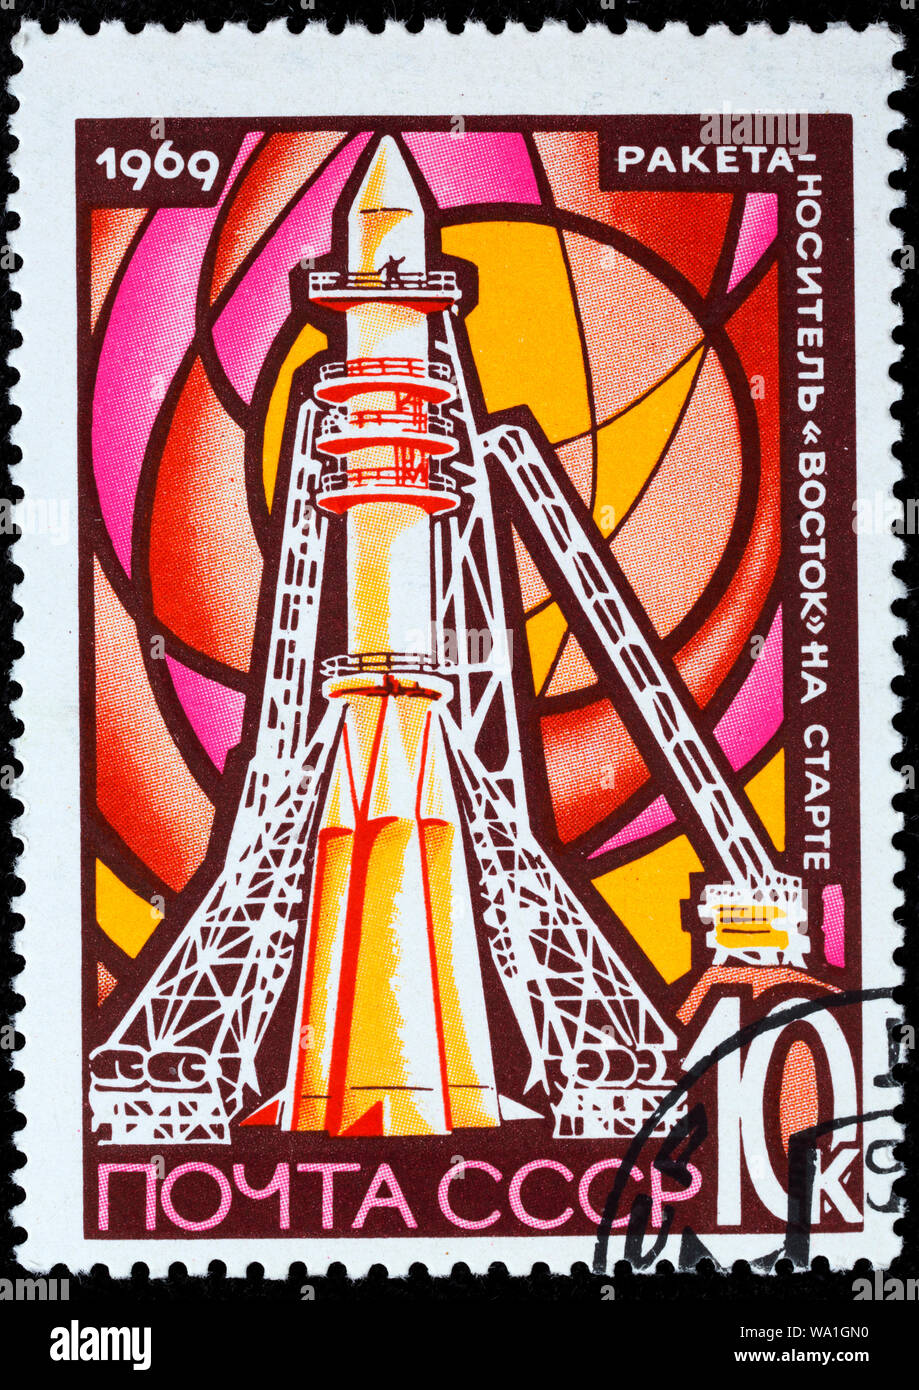 Vostok-1 on launching-pad, Cosmonautics Day, postage stamp, Russia, USSR, 1969 Stock Photo